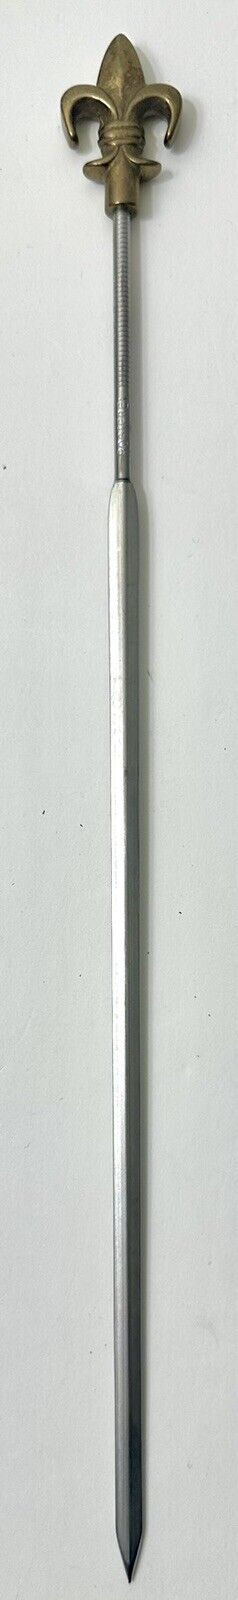 Vintage Rostfrei Miniature Brass Silver Metal Sword Letter Opener Germany